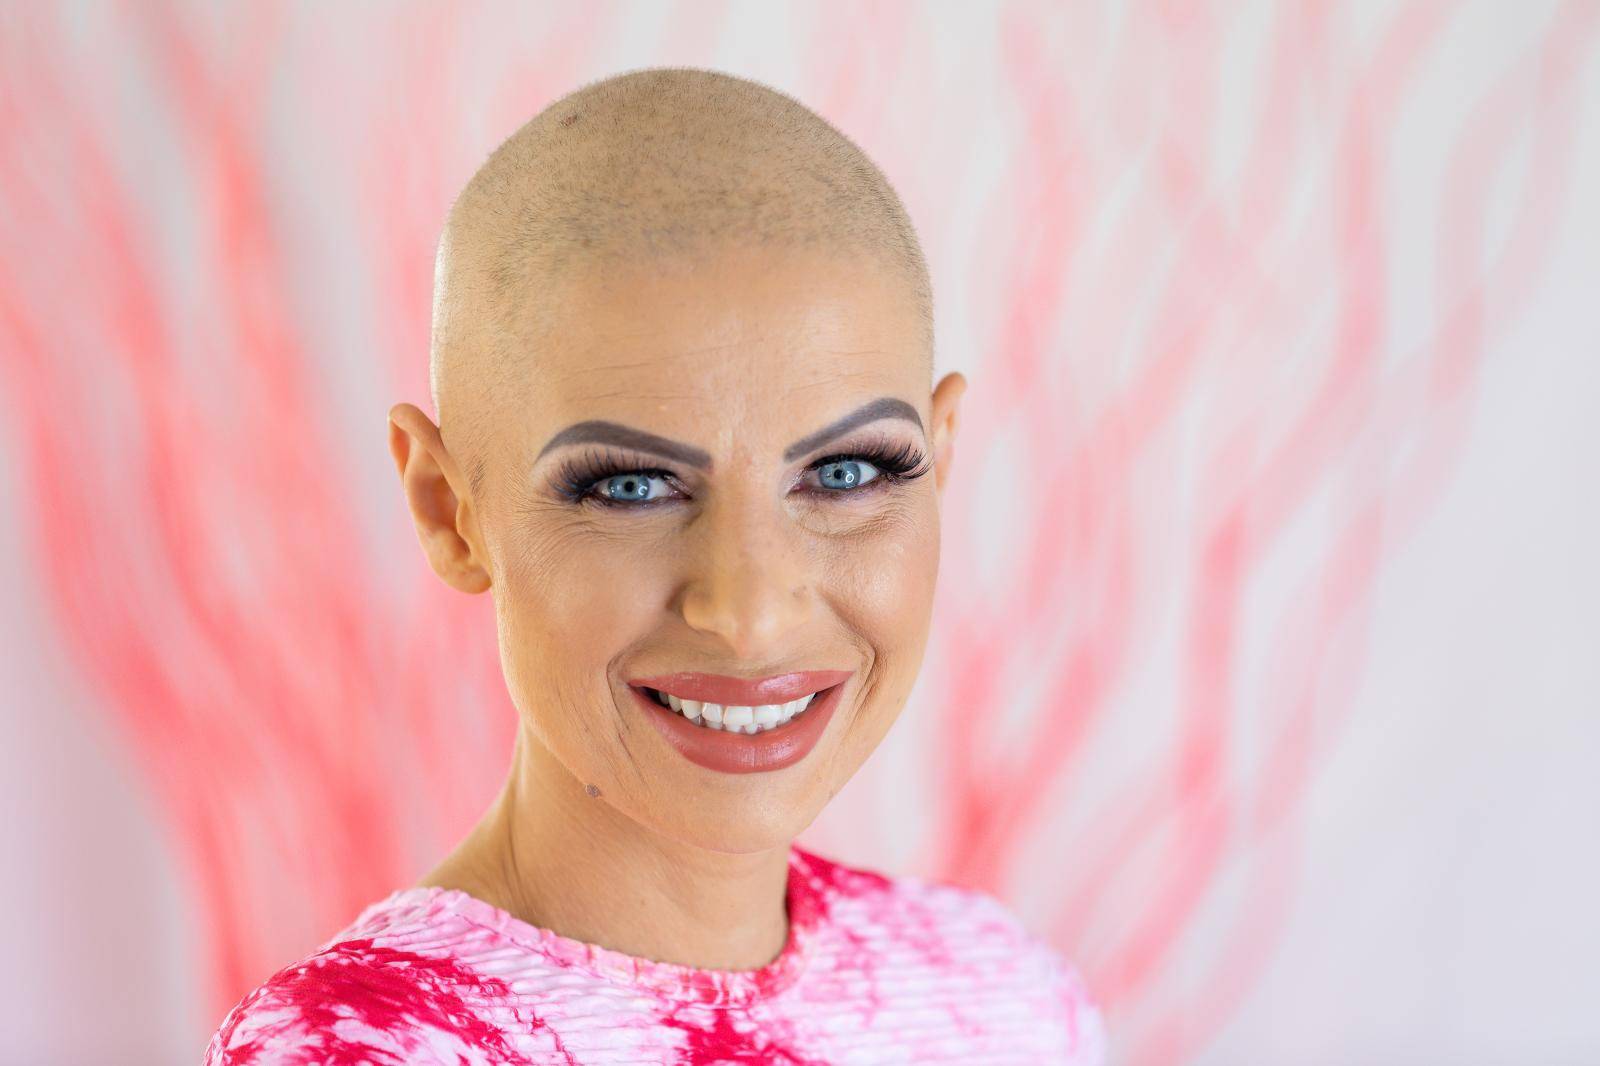 Umrla hrabra lavica Vanja (37): Imala je rak dojke, protiv opake bolesti borila se s osmijehom